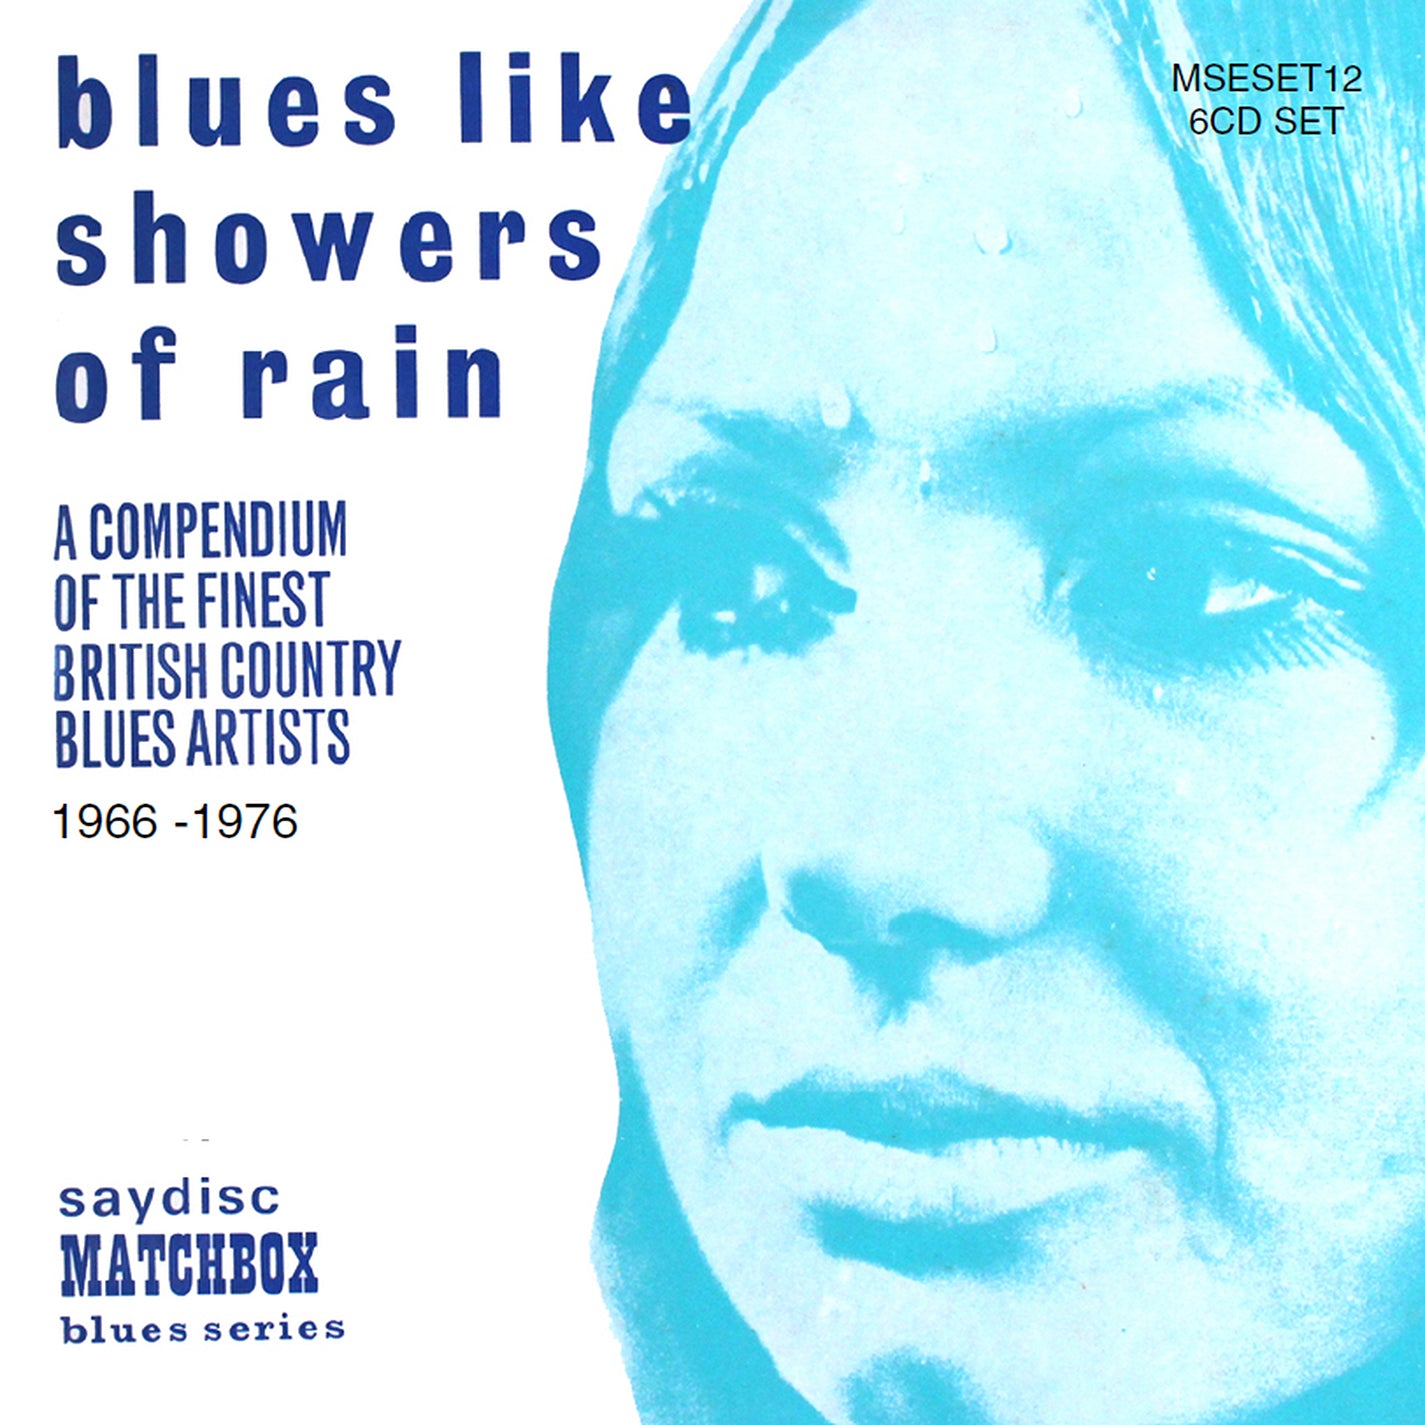 Matchbox Bluesmaster Series, Vol. 12 - Blues Like Showers of Rain